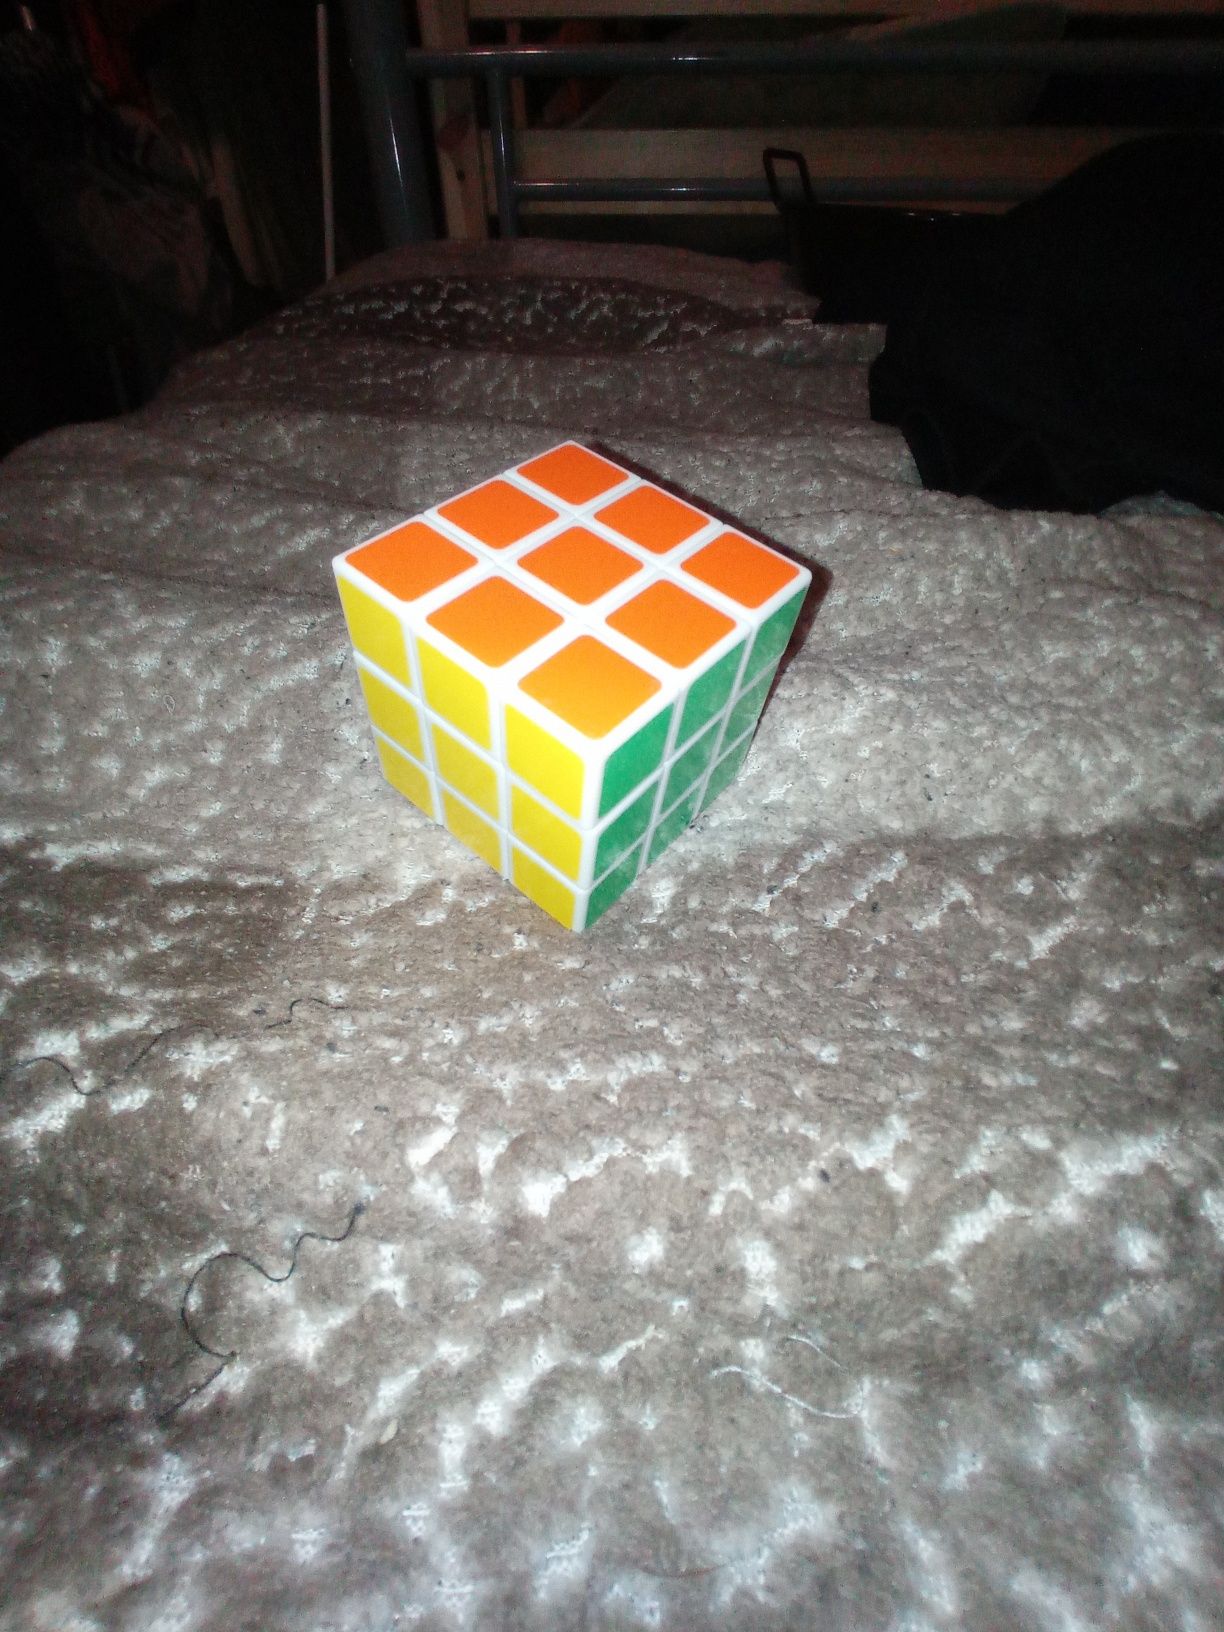 Kostka Rubika 3×3